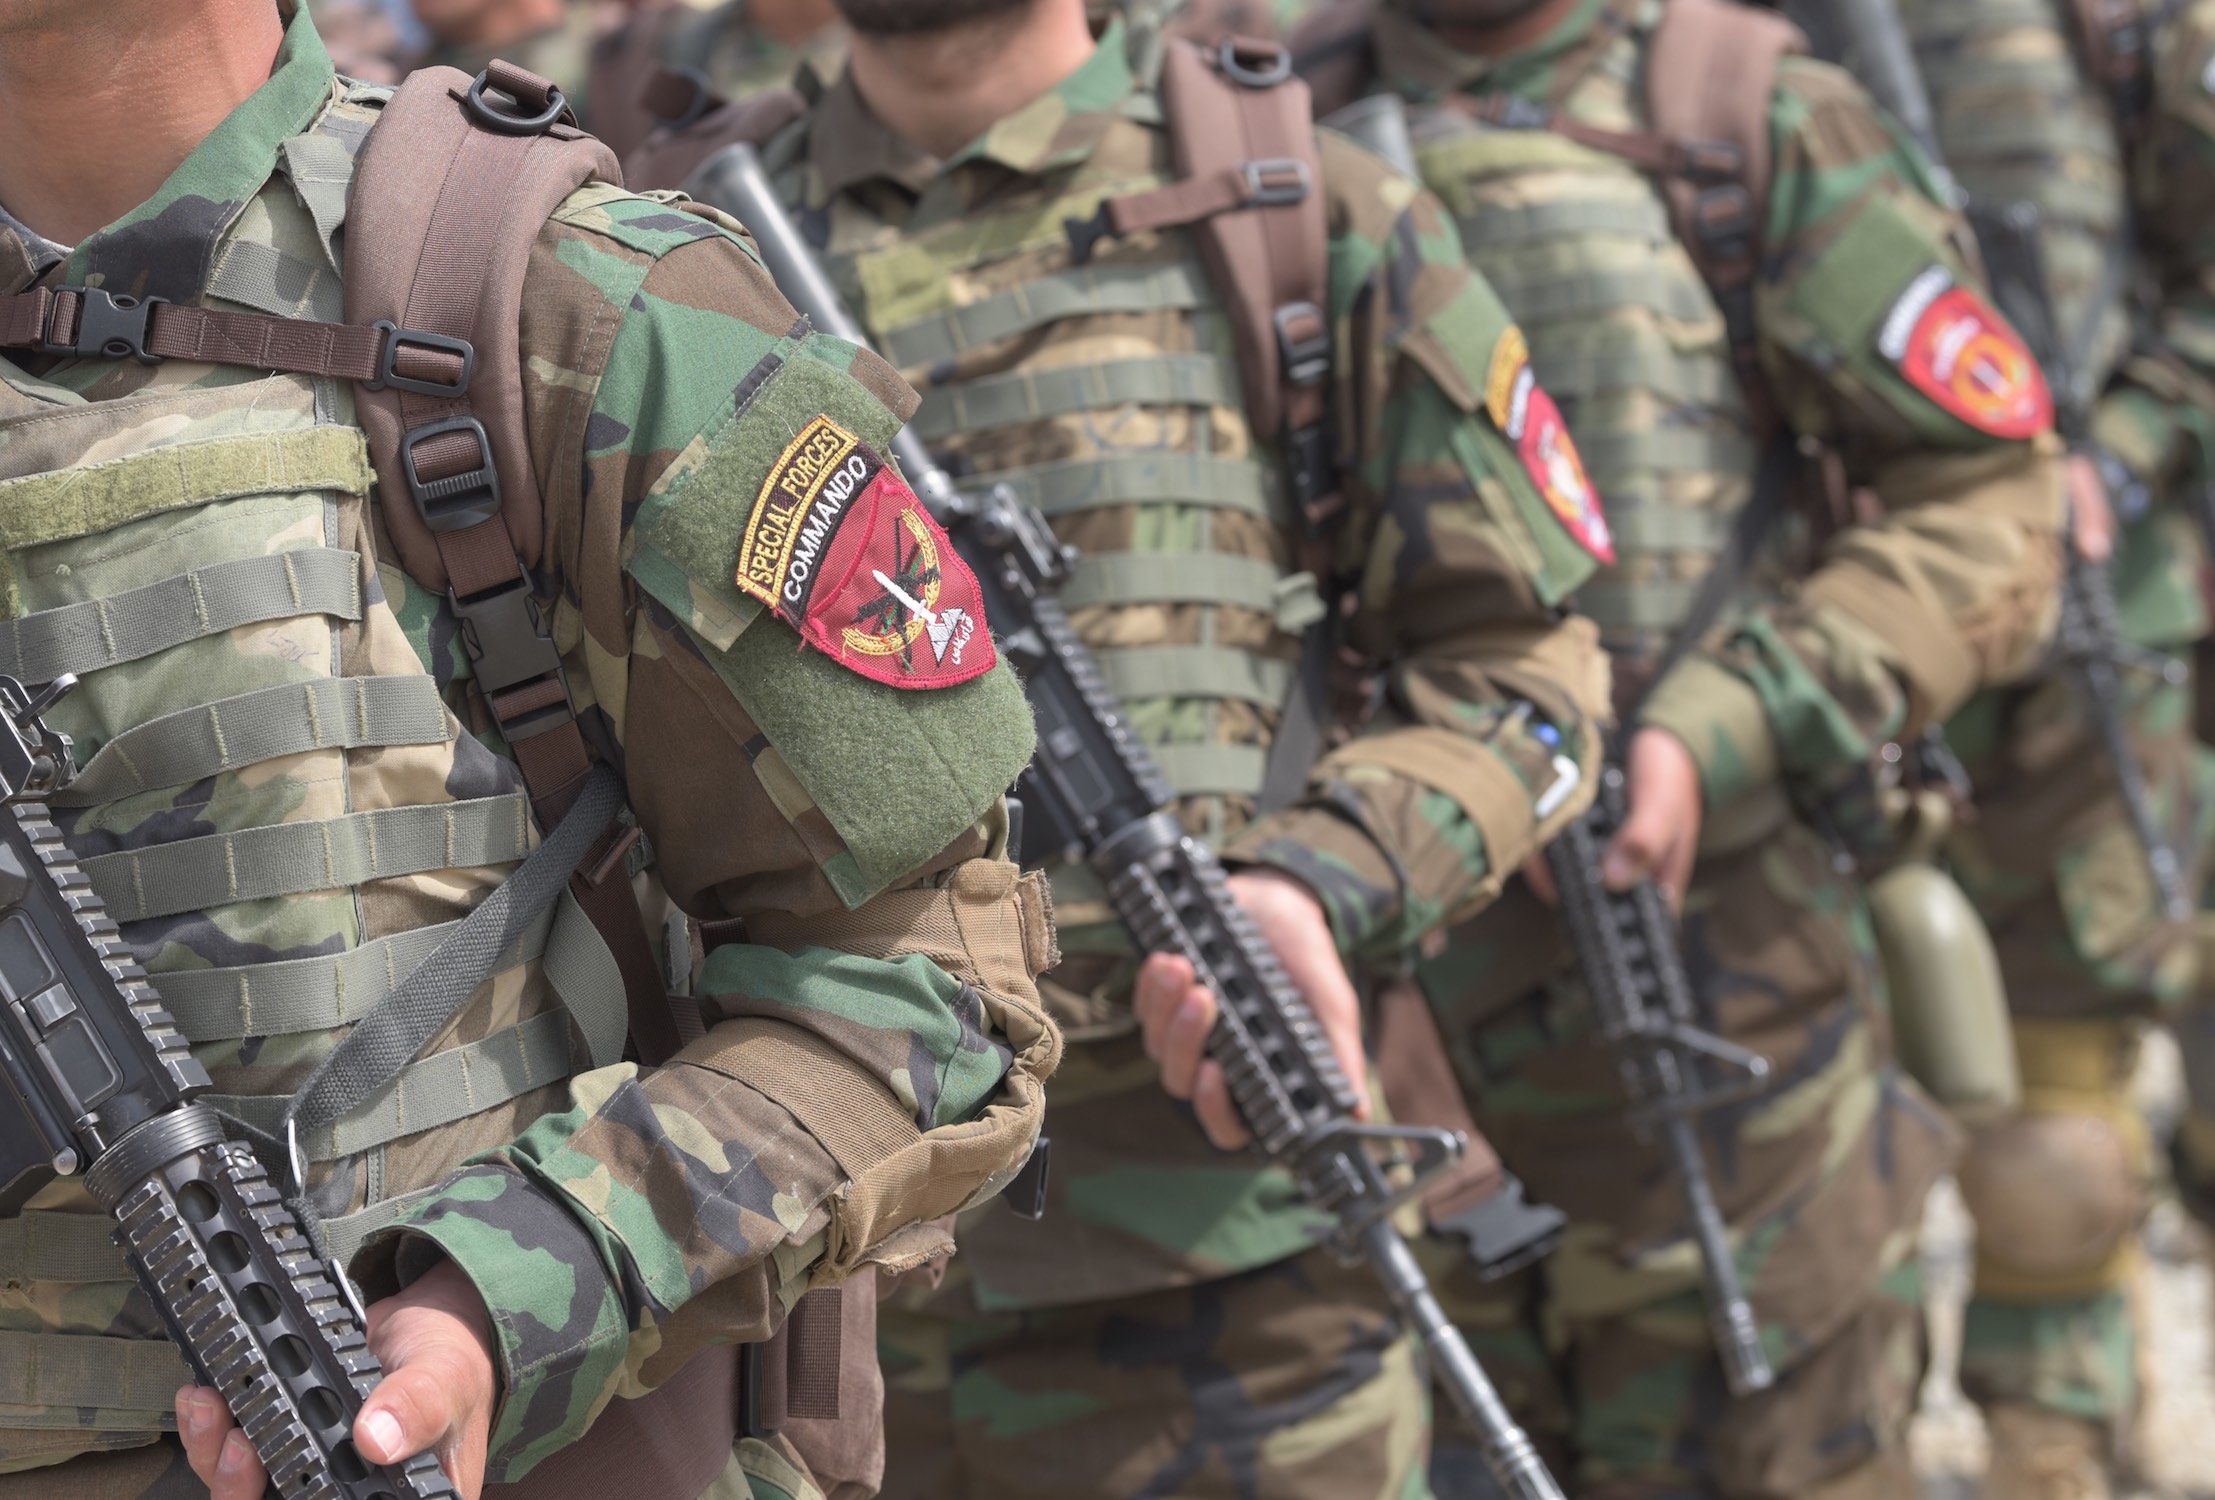 Afghan National Army soldiers